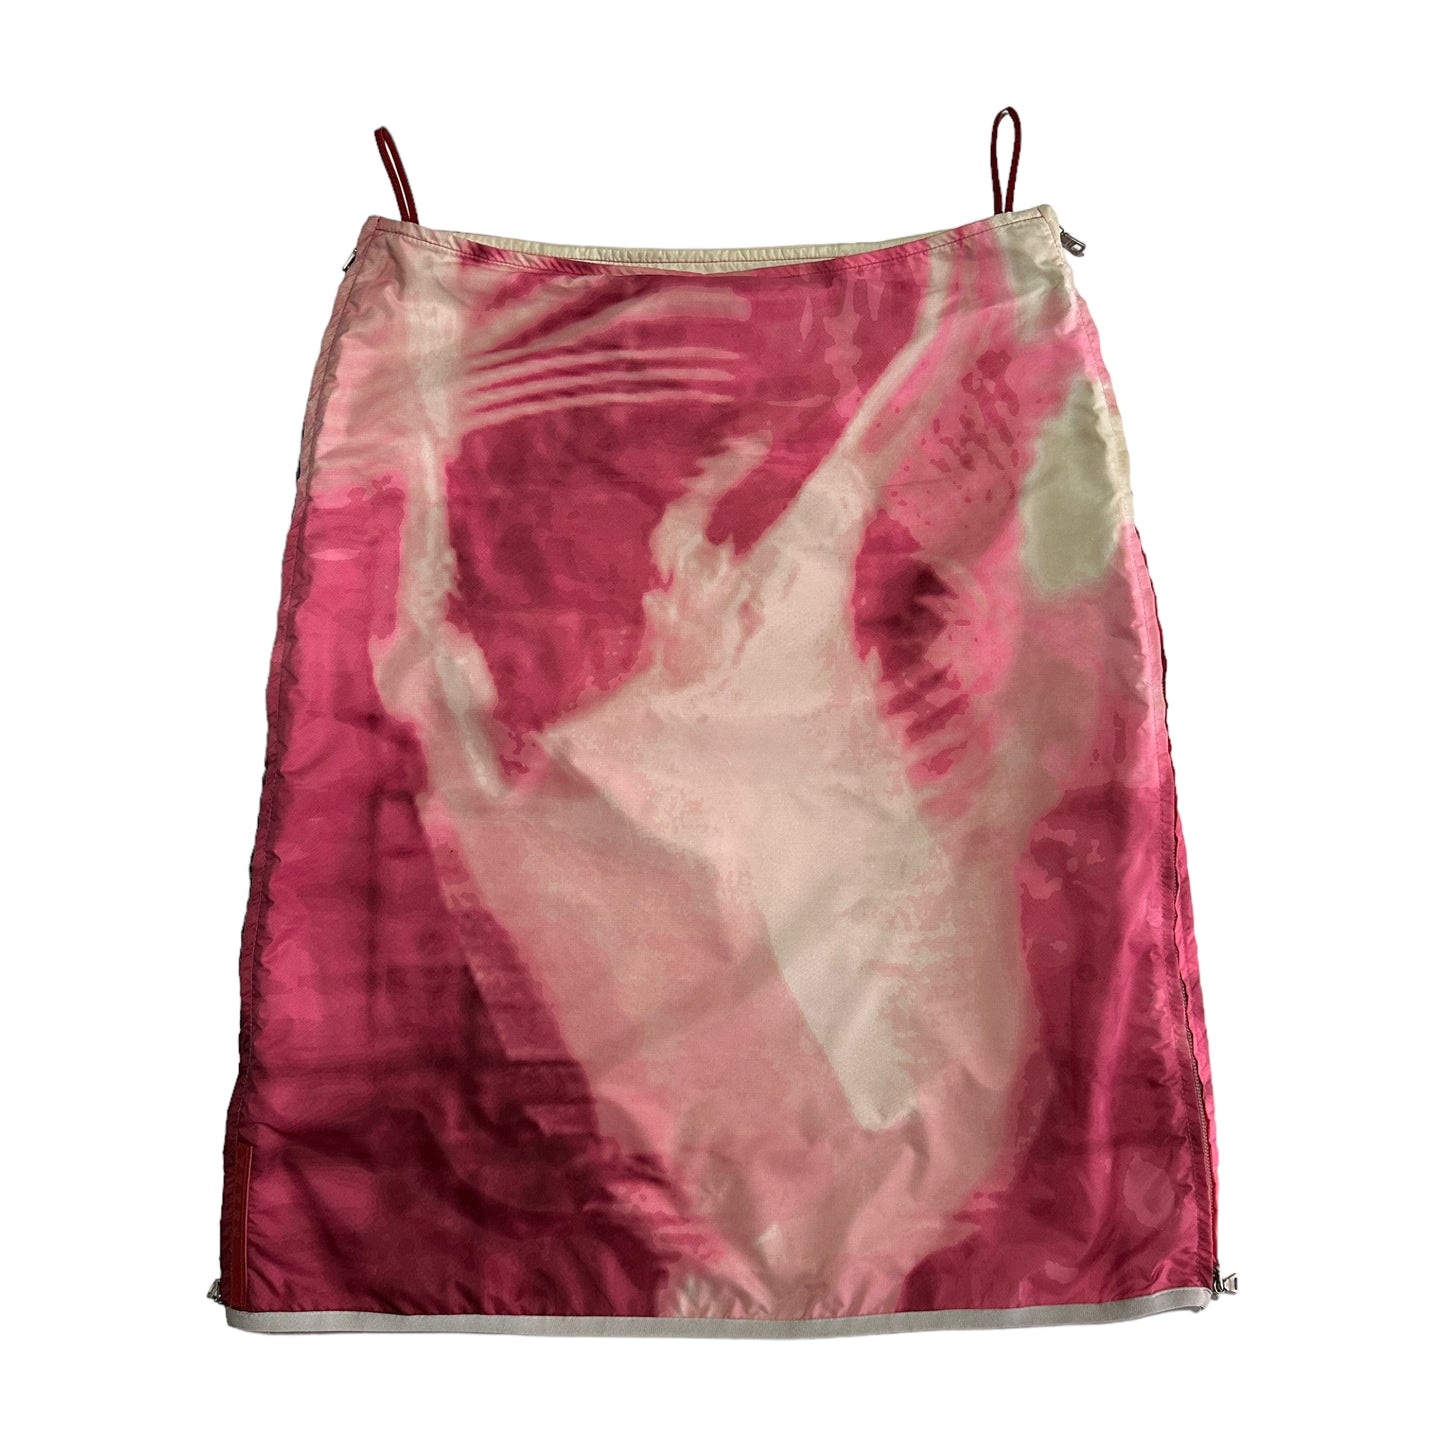 S/S 2000 Prada Sport Abstract Pink Cloud Print Skirt (42)